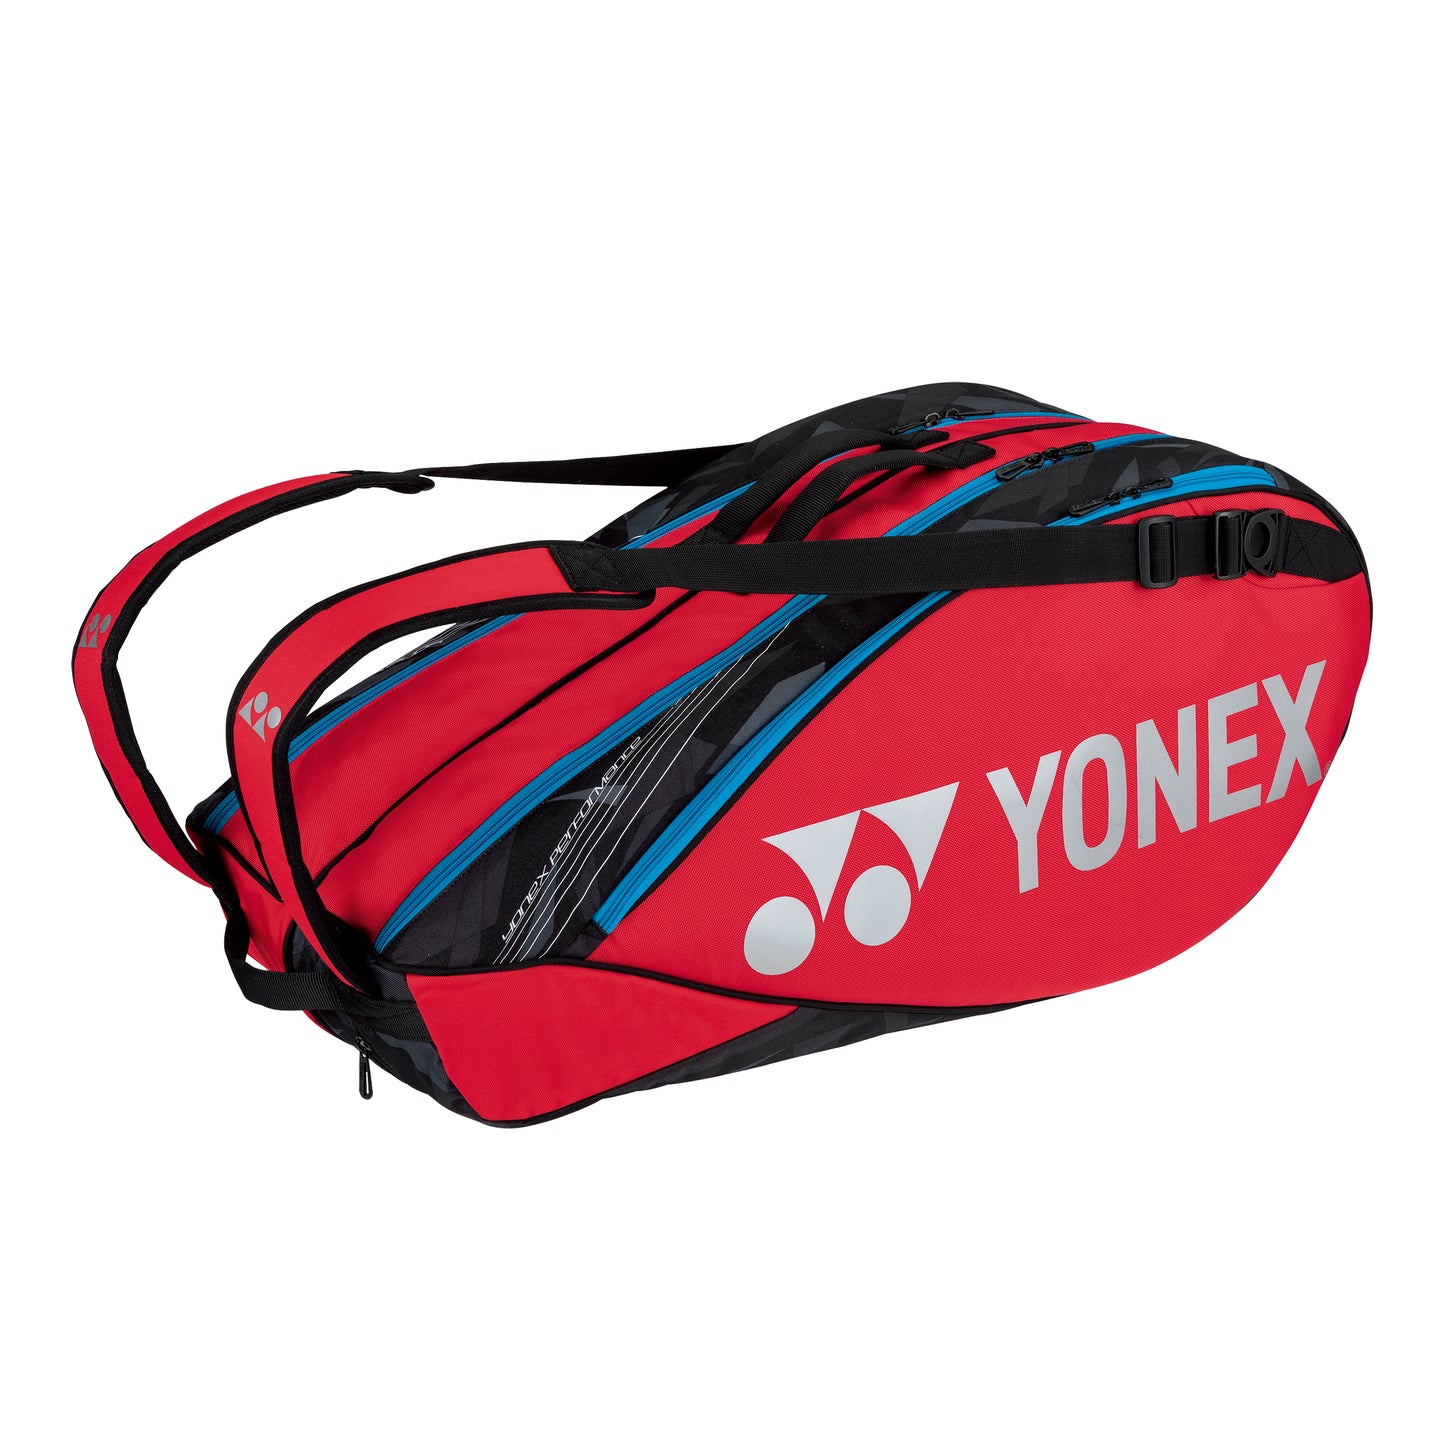 Yonex Pro Series Scarlet 6 pack tennis badminton bag